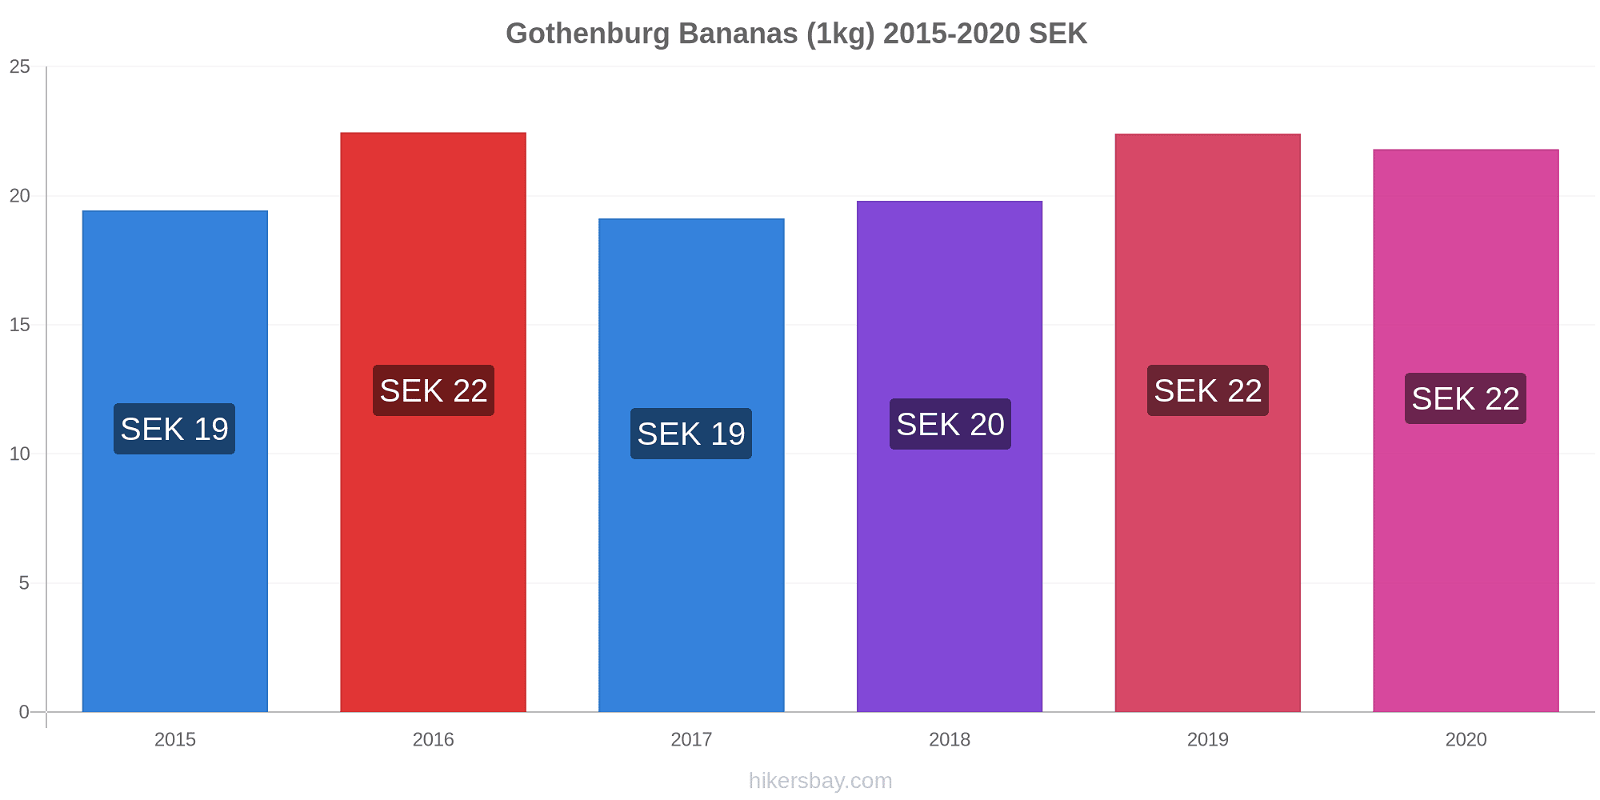 Gothenburg price changes Bananas (1kg) hikersbay.com